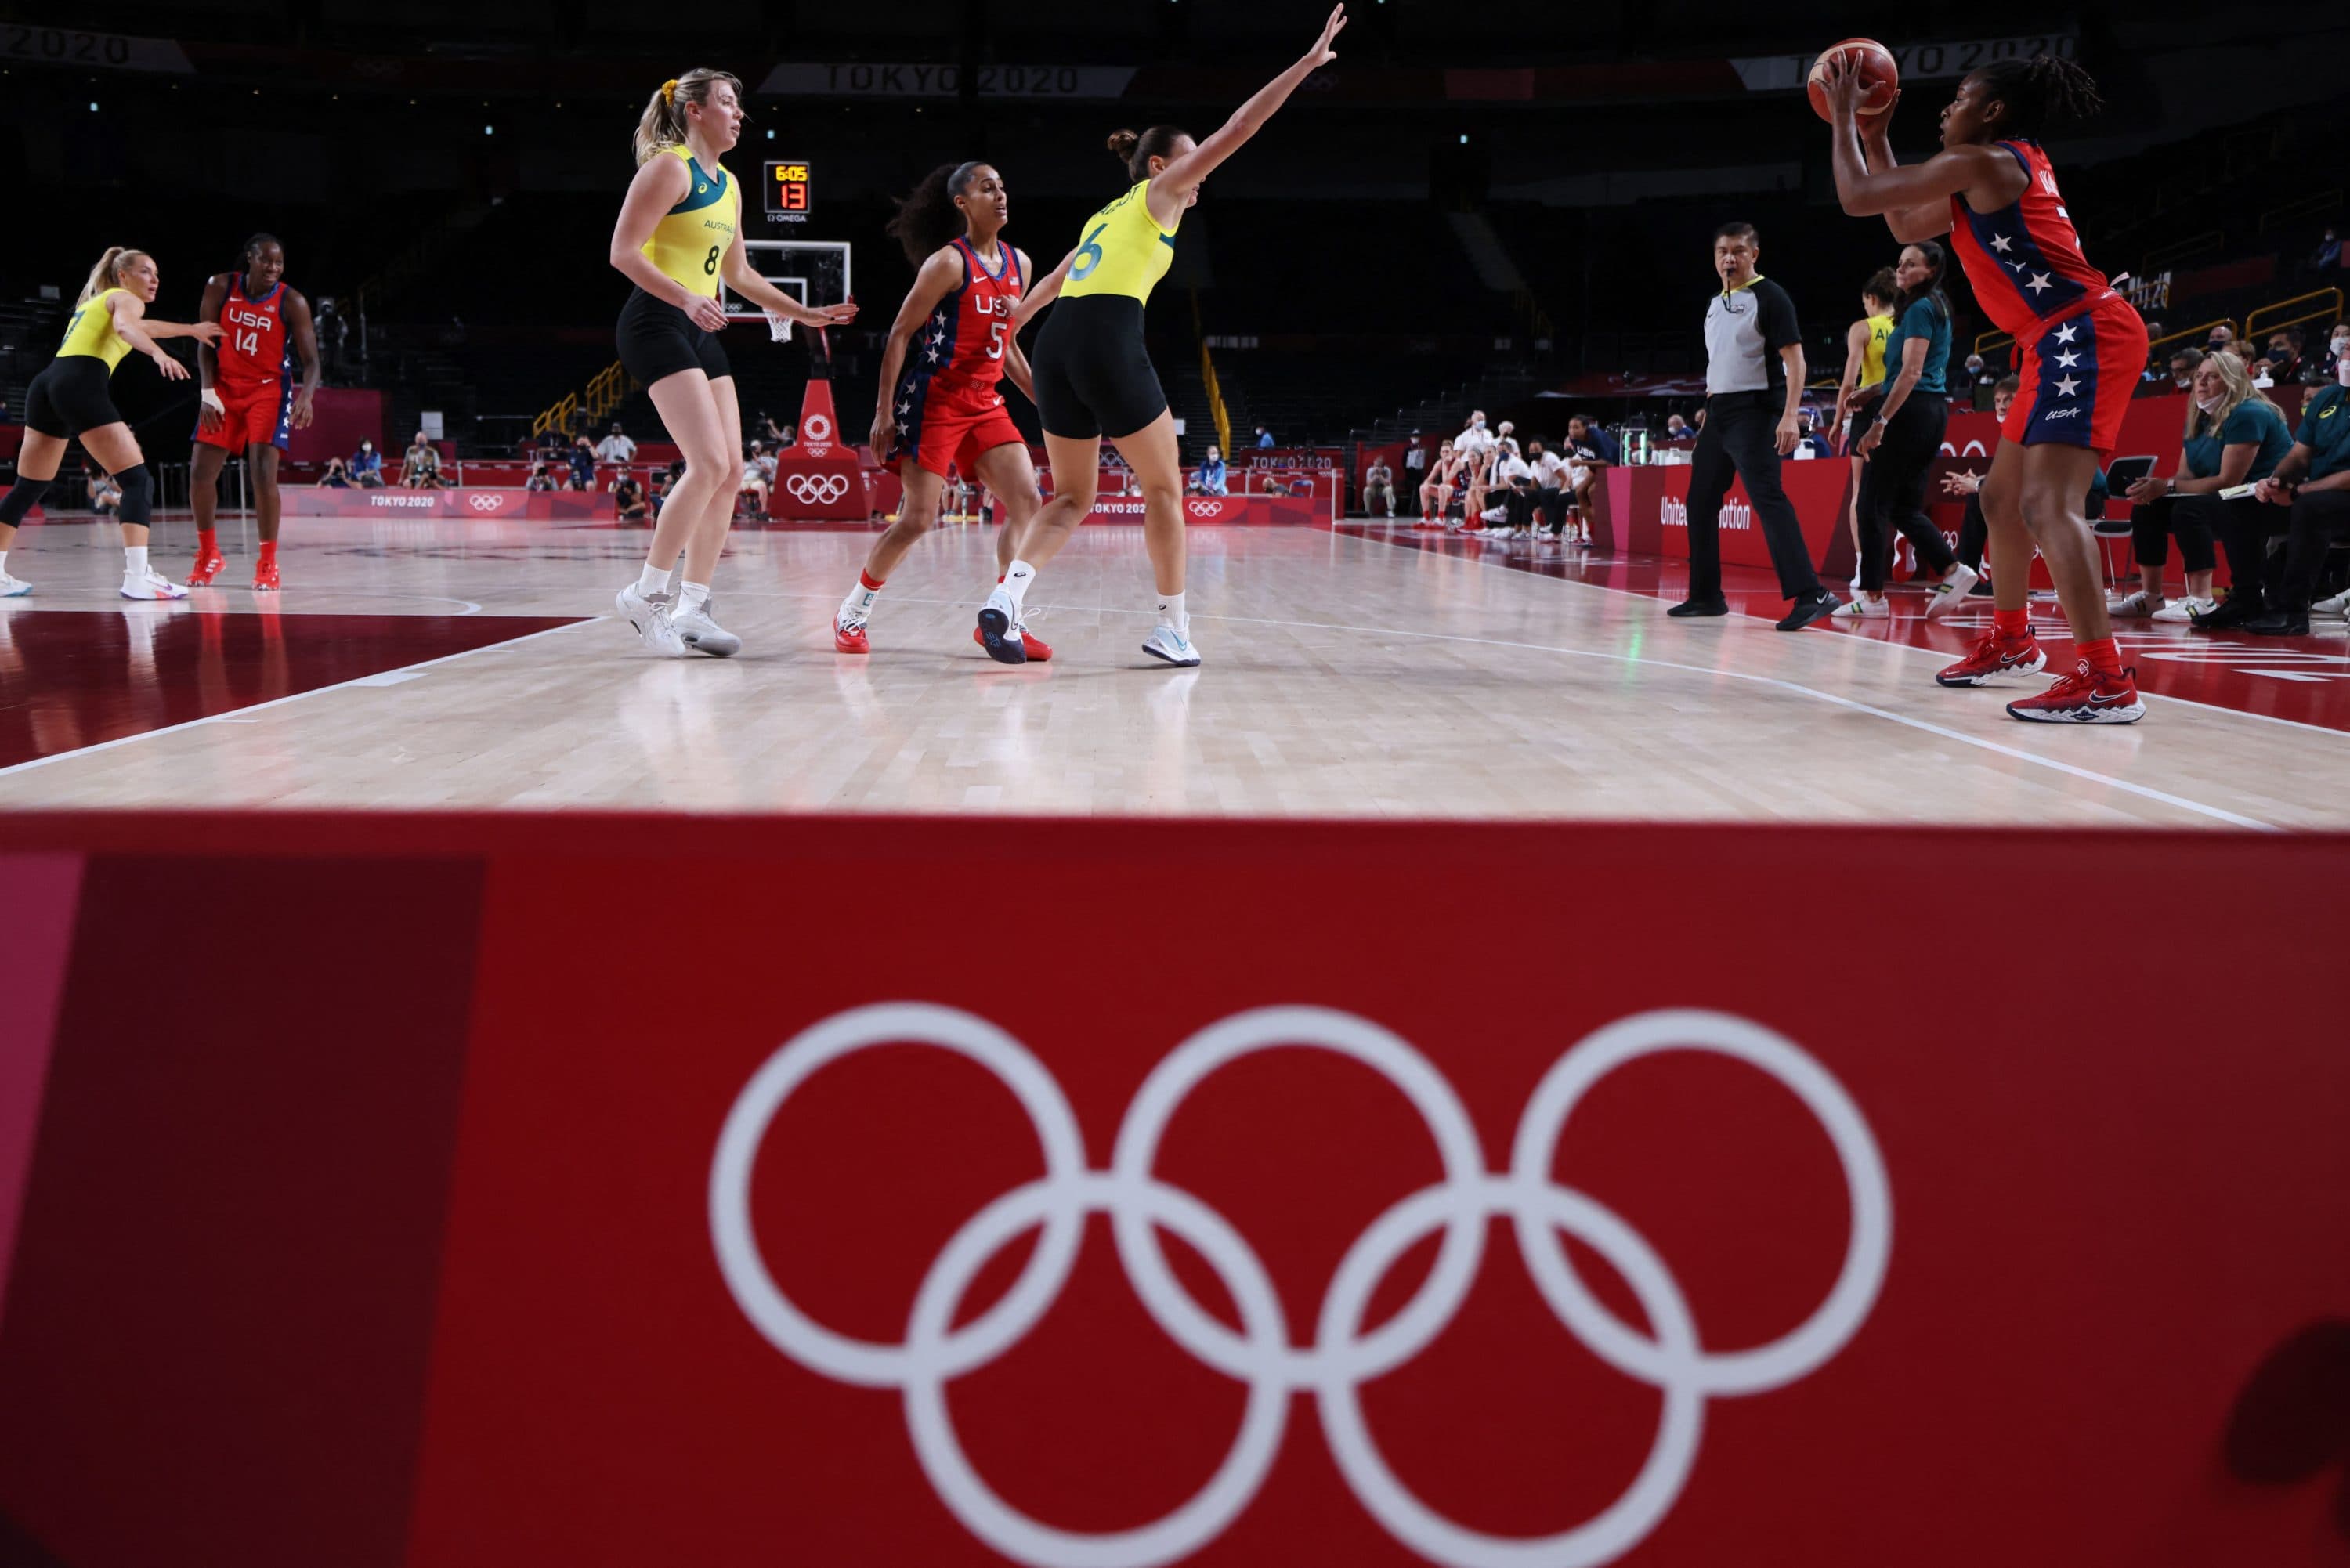 U S Women S Basketball Winning Streak Continues In Tokyo Olympics Japan Dominates Skateboarding Here Now